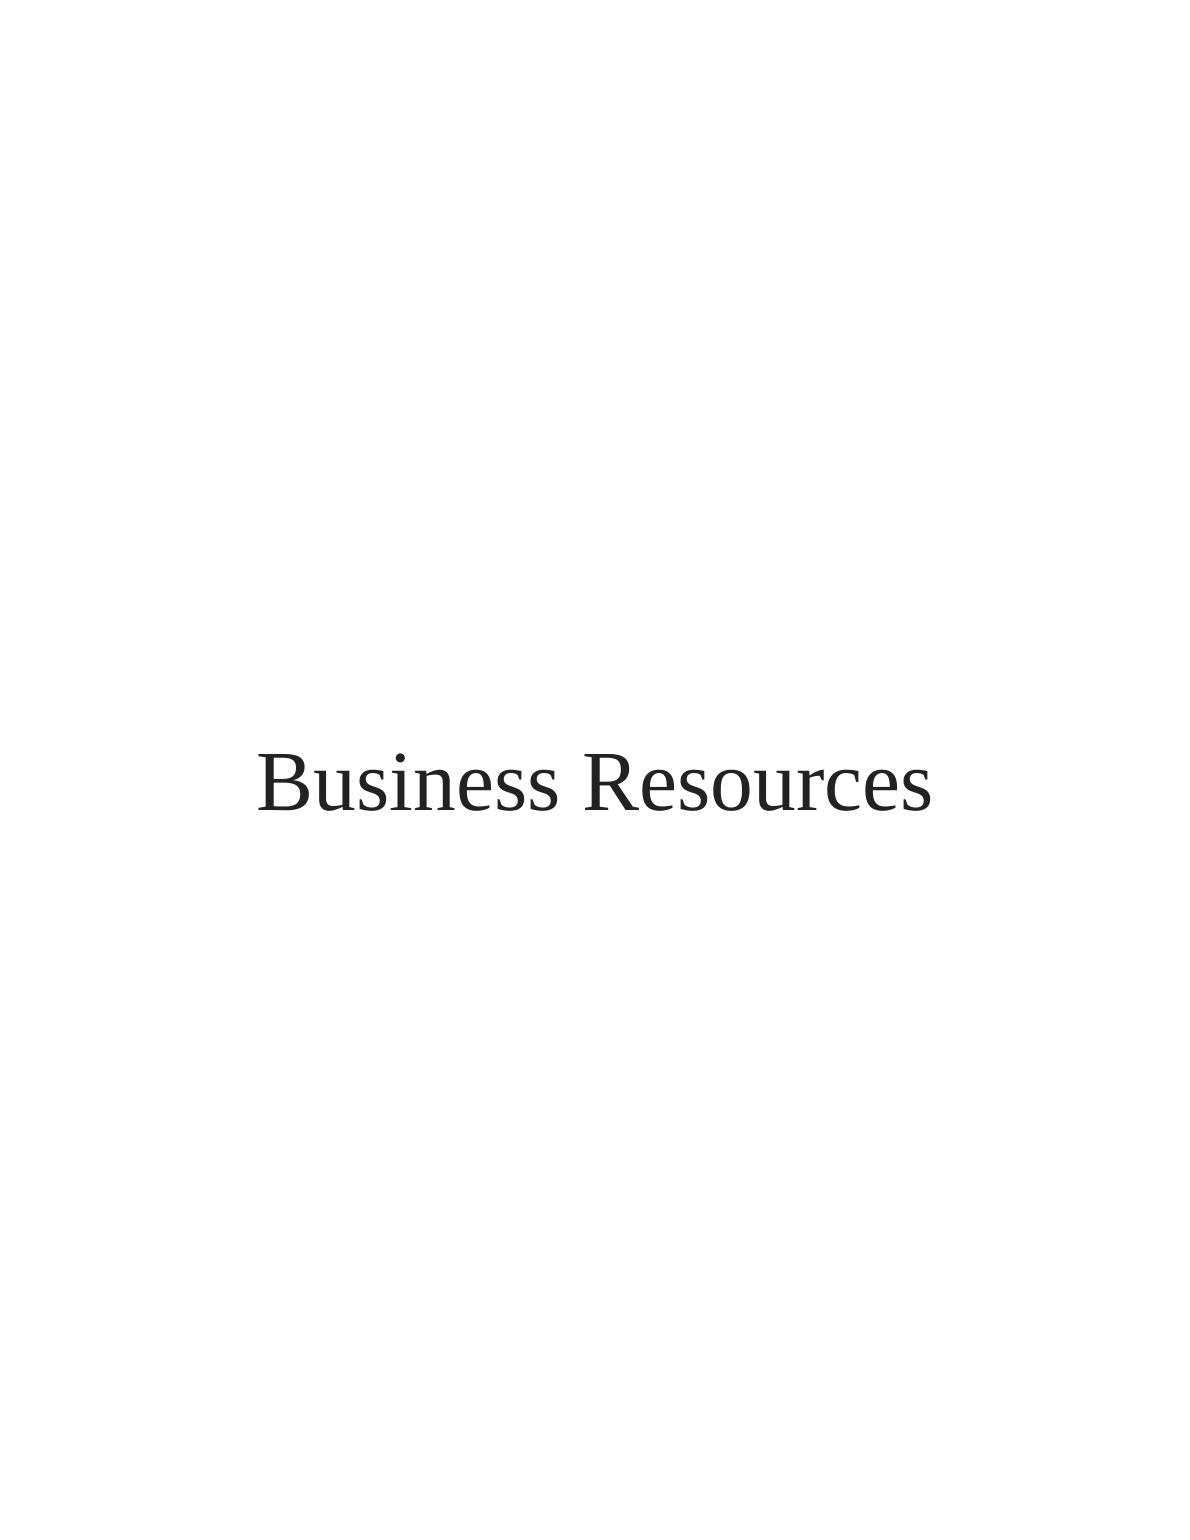 Business Resource Assignment: ASDA_1